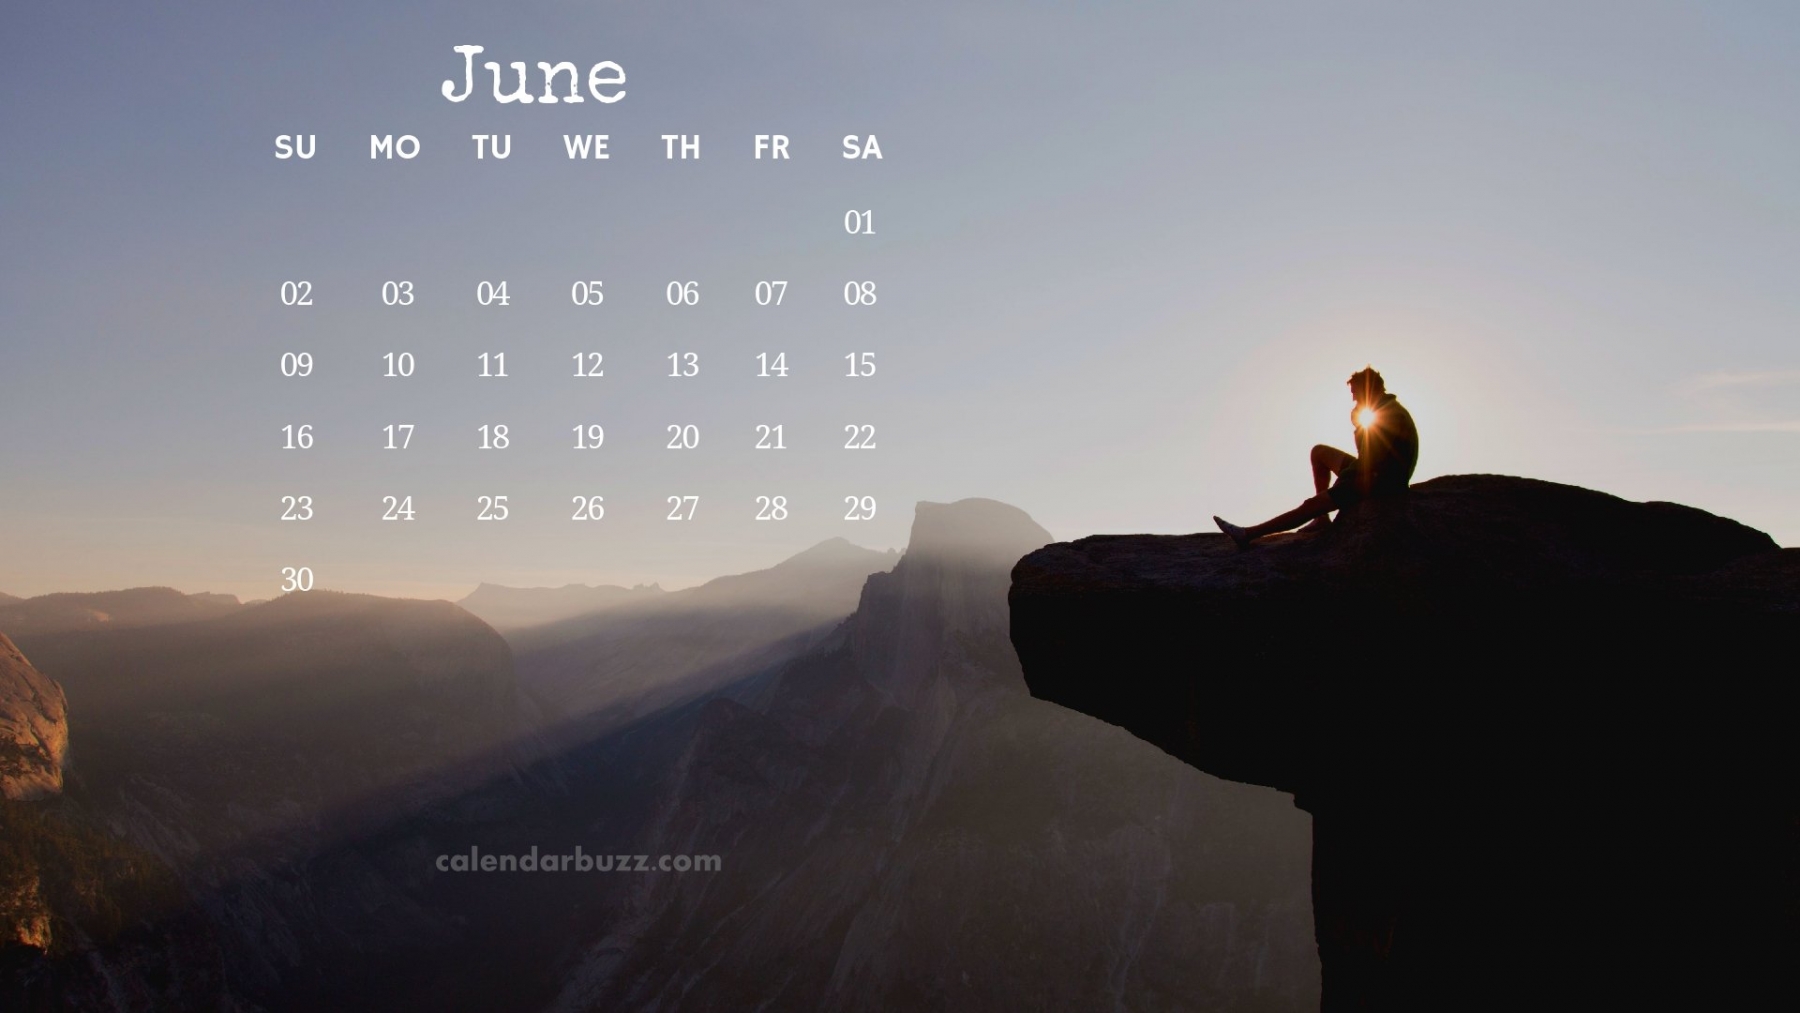 June Calendar HD Wallpaper And Background Image Yl Puting